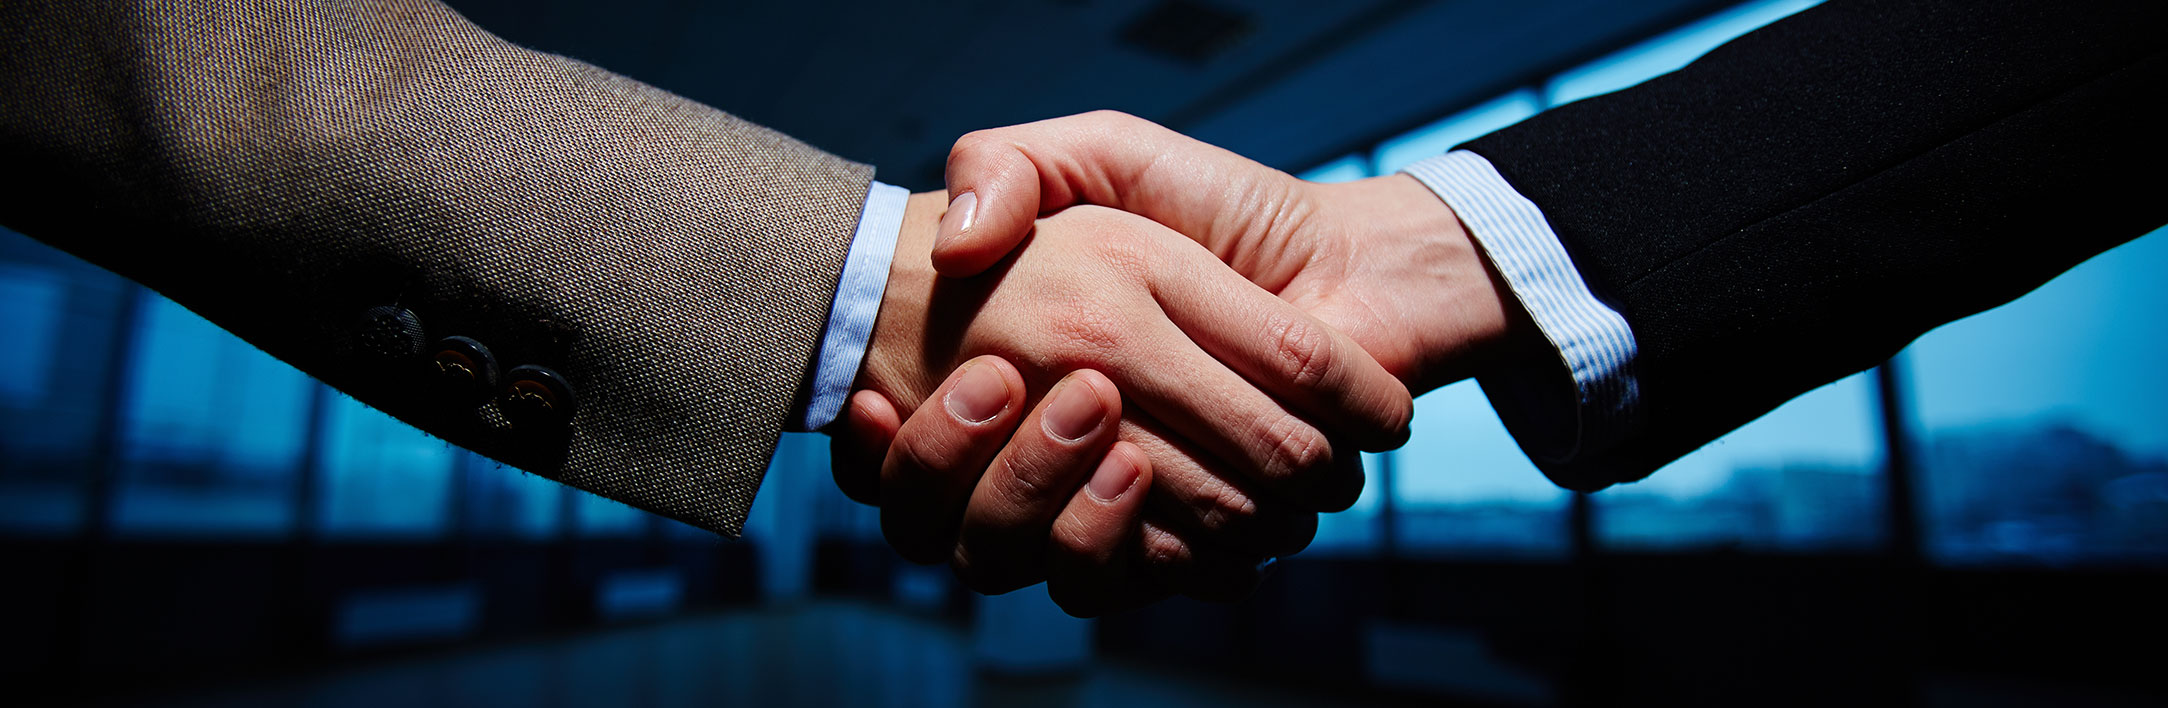 handshake-businessmen-min